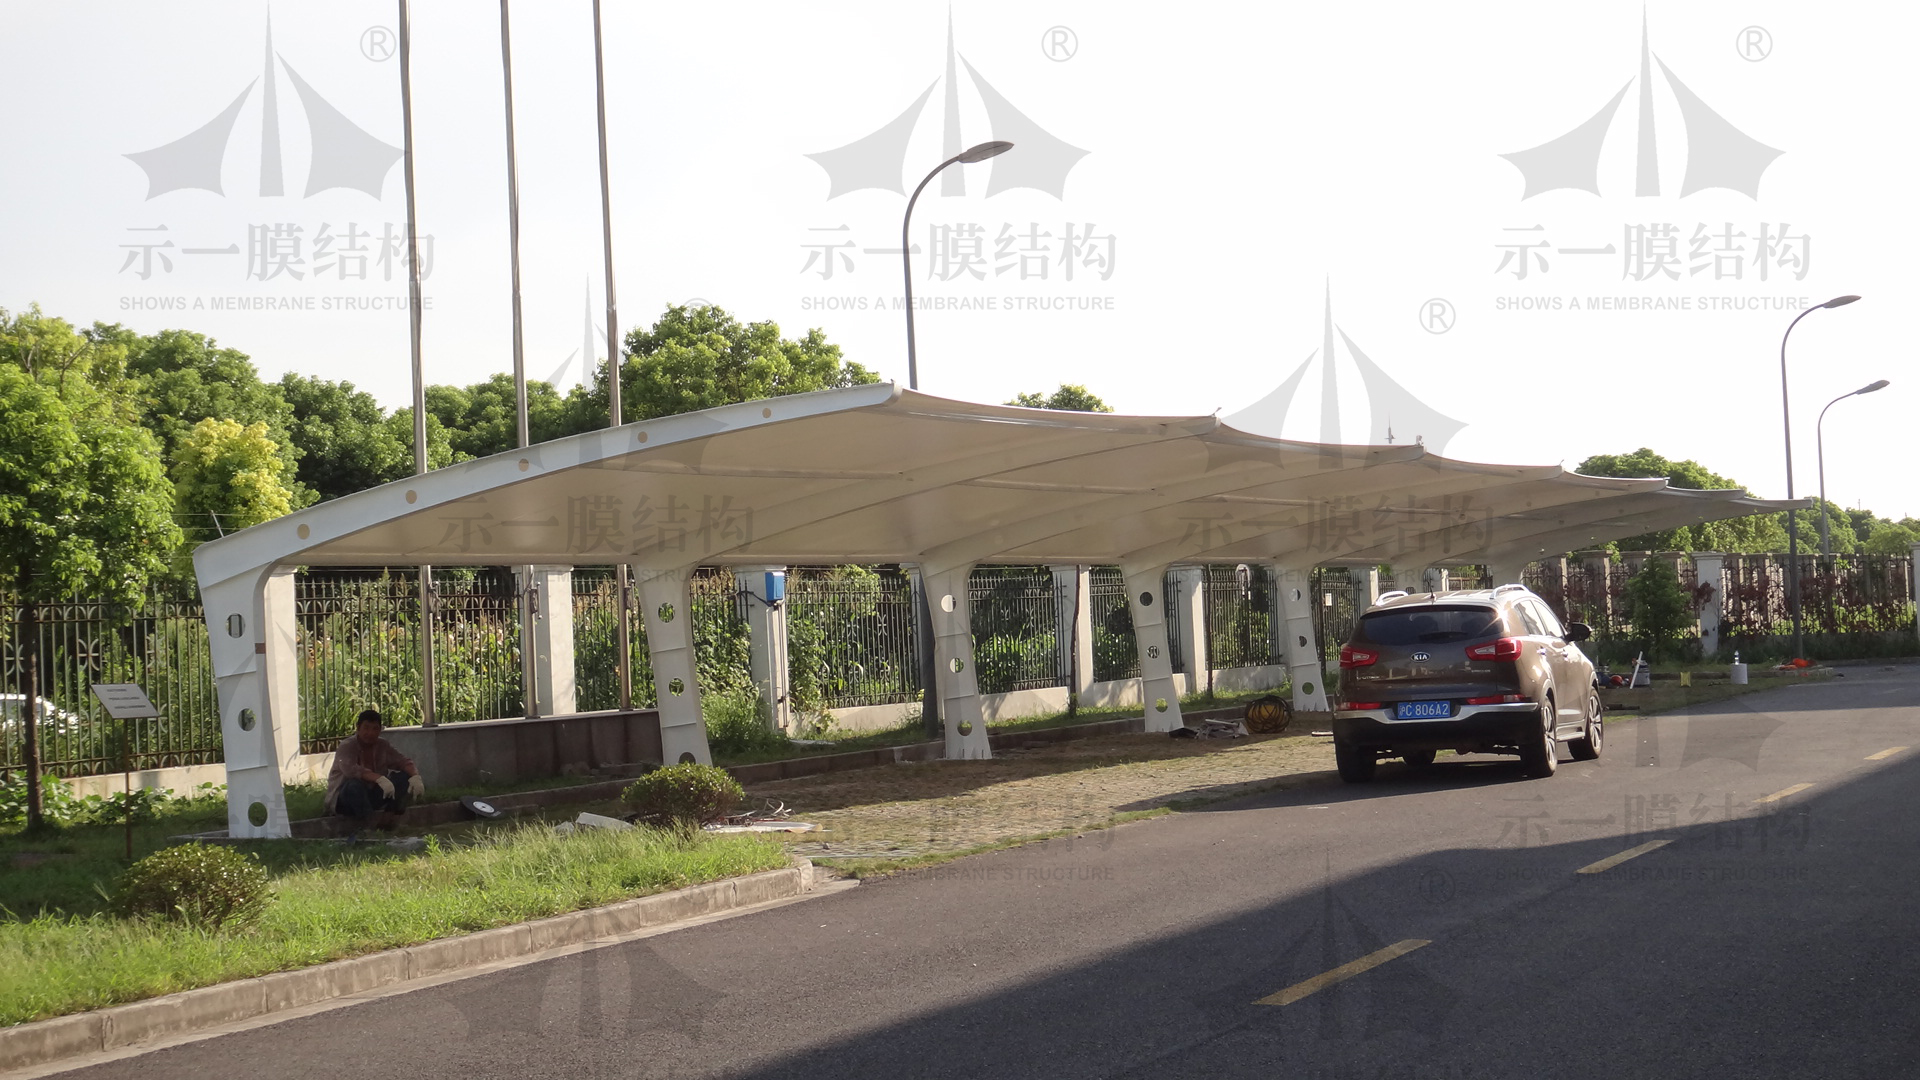 Shanghai Baoshan Membrane Structure Carport